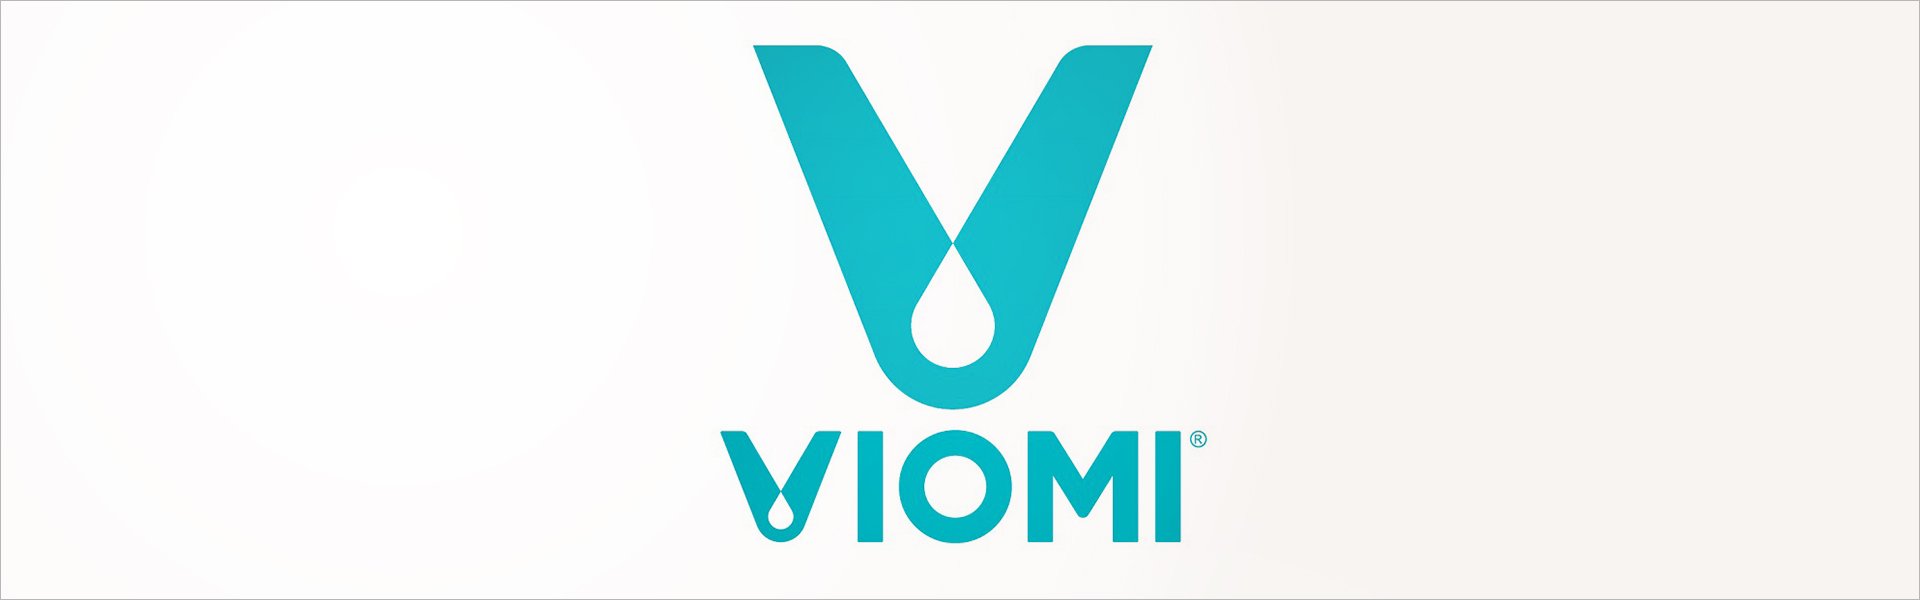 Viomi V3 Max V-RVCLM27 Viomi